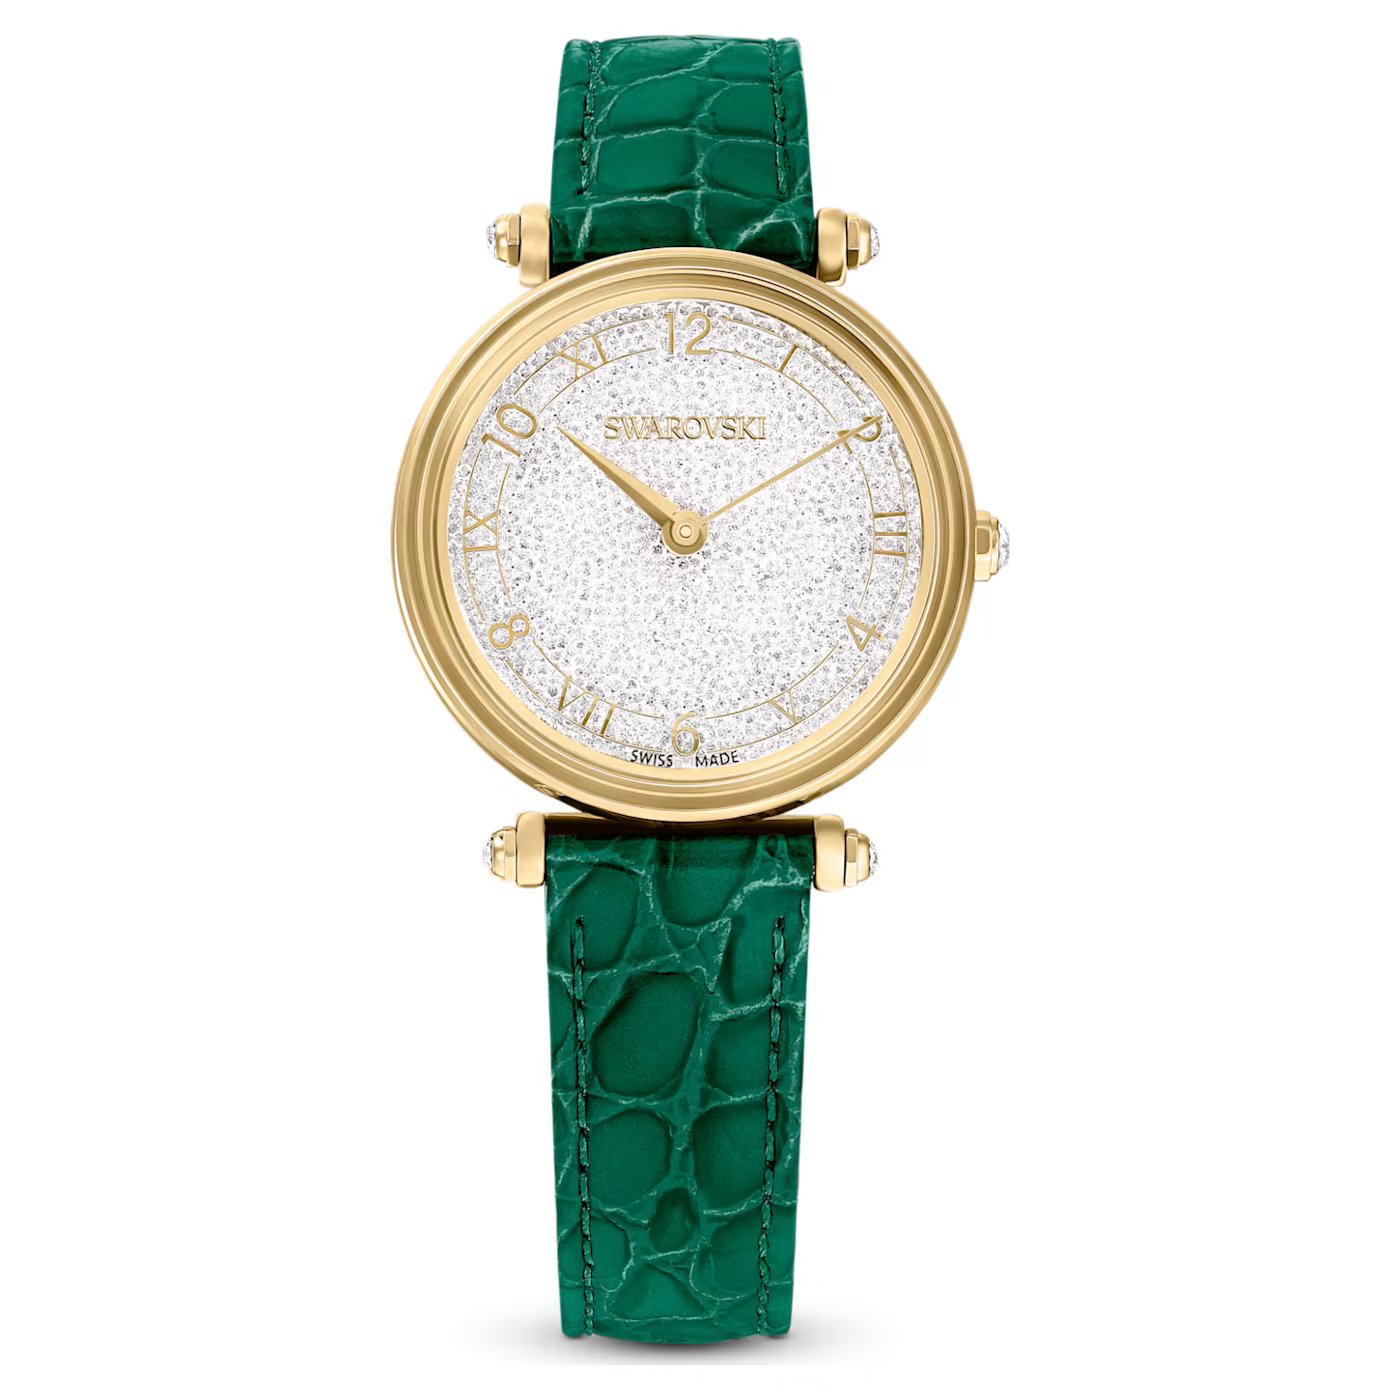 64dbaf04d52b1_crystalline-wonder-watch--swiss-made--leather-strap--green--gold-tone-finish-swarovski-5656893.jpg